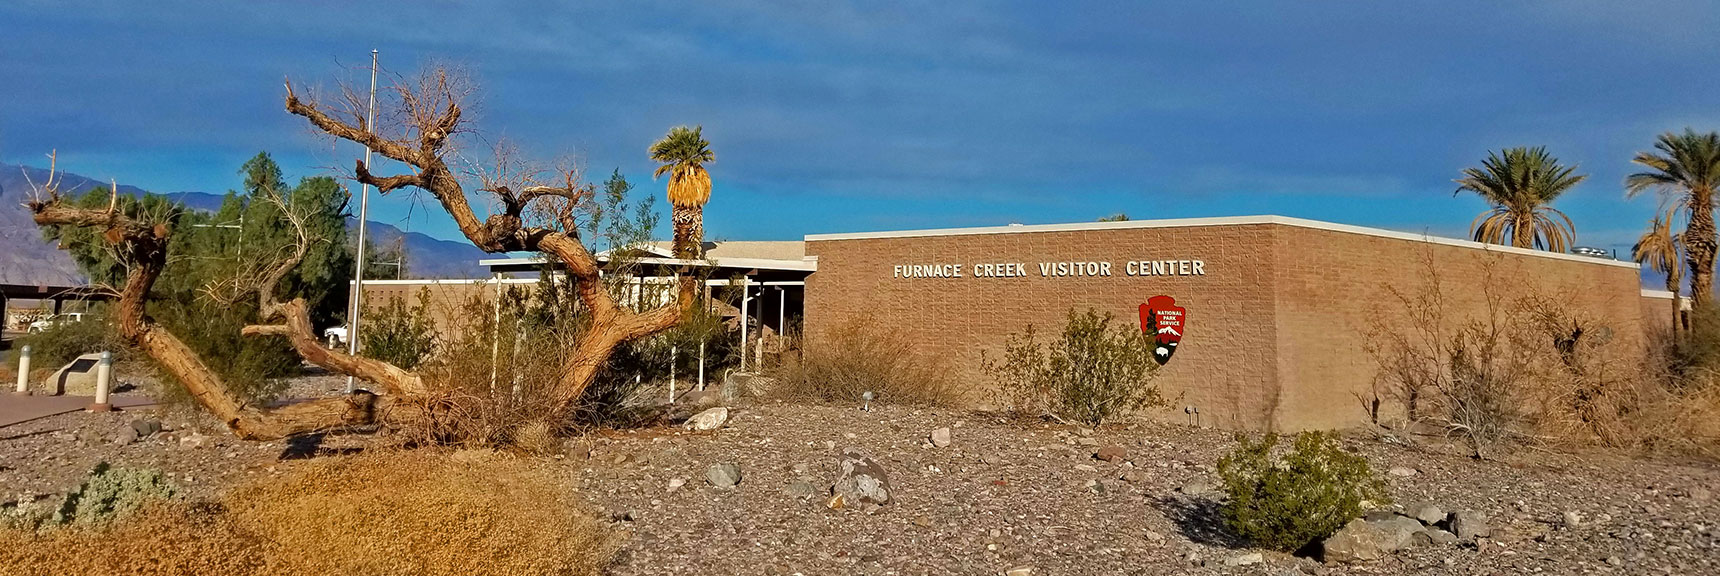 Furnace Creek Visitor Center | Death Valley, California